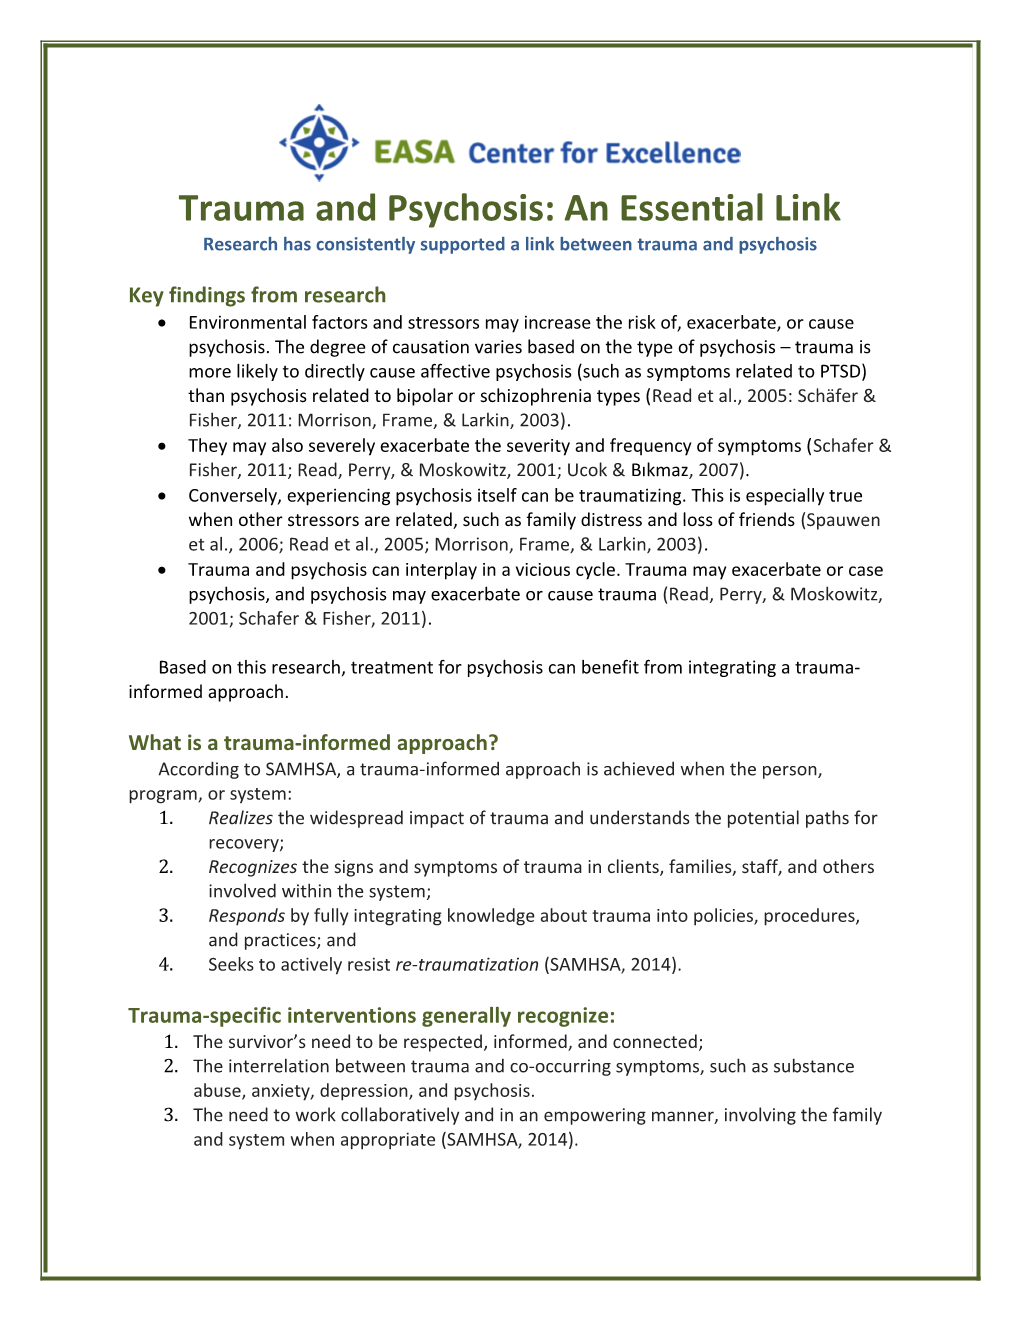 Trauma and Psychosis: an Essential Link